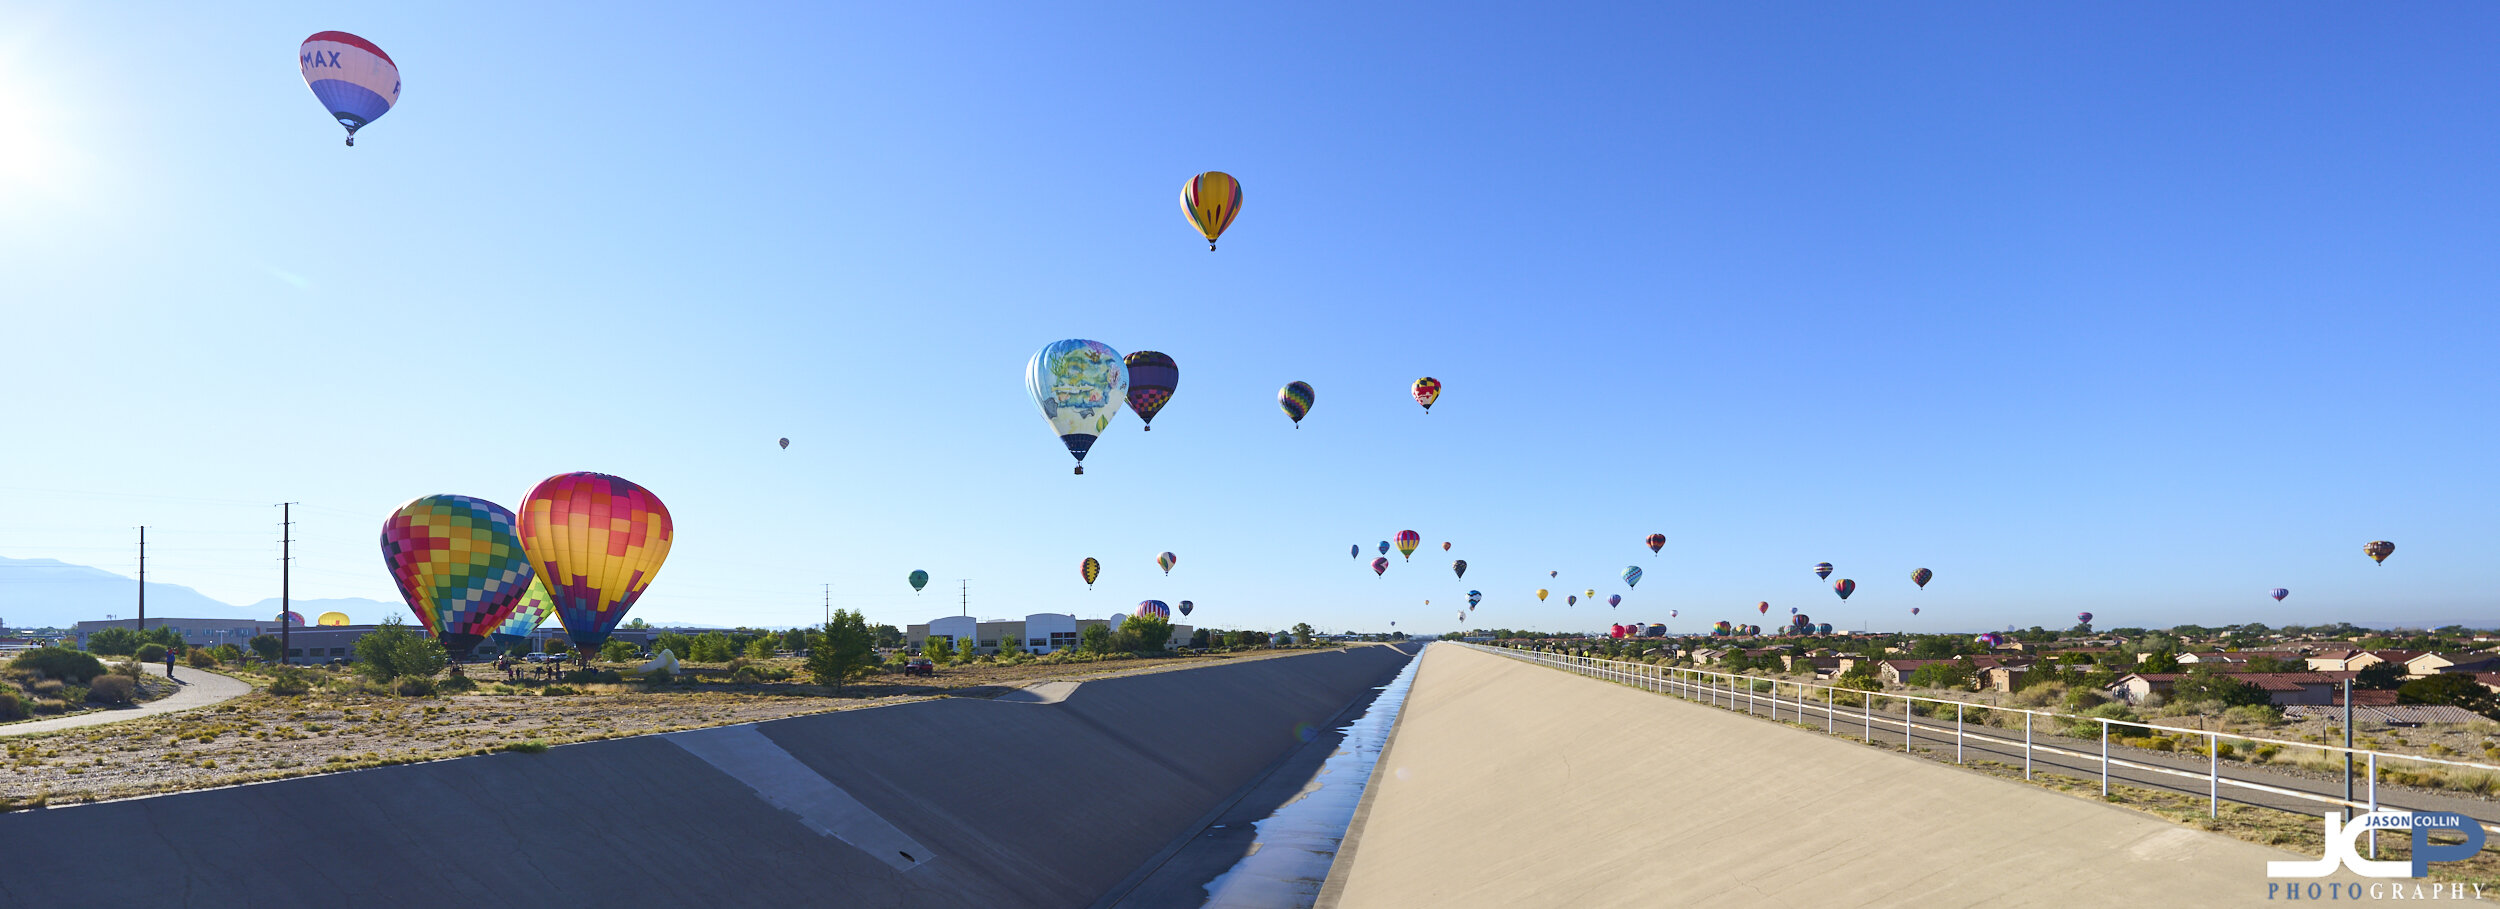 balloon-fiesta-2021-abq-27000.jpg